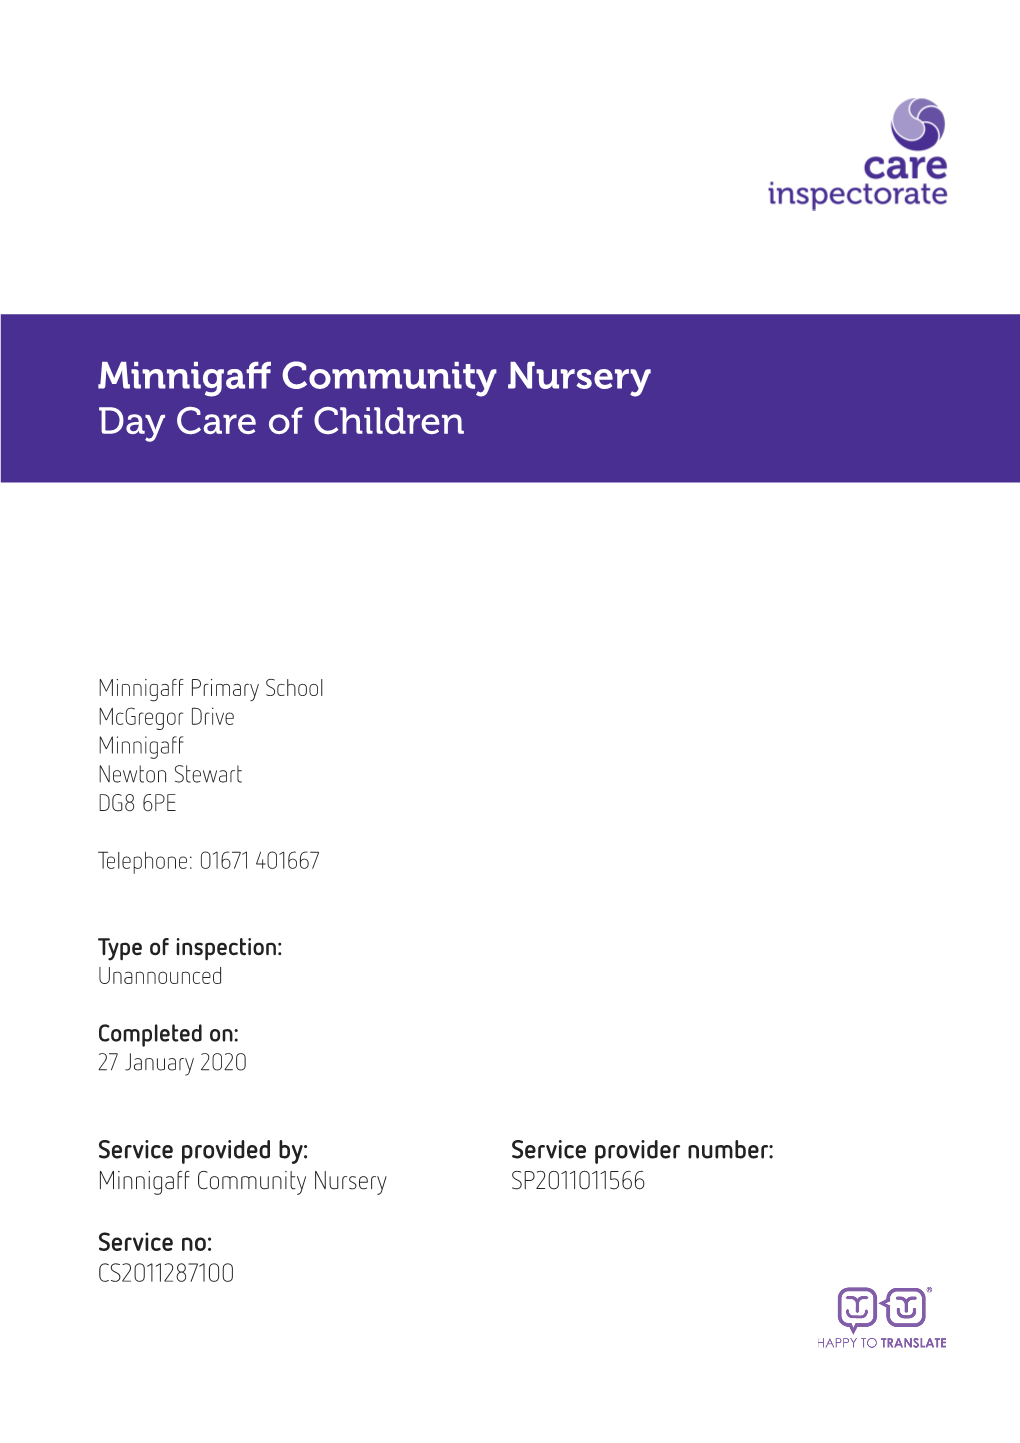 Minnigaff Community Nursery Day Care of Children